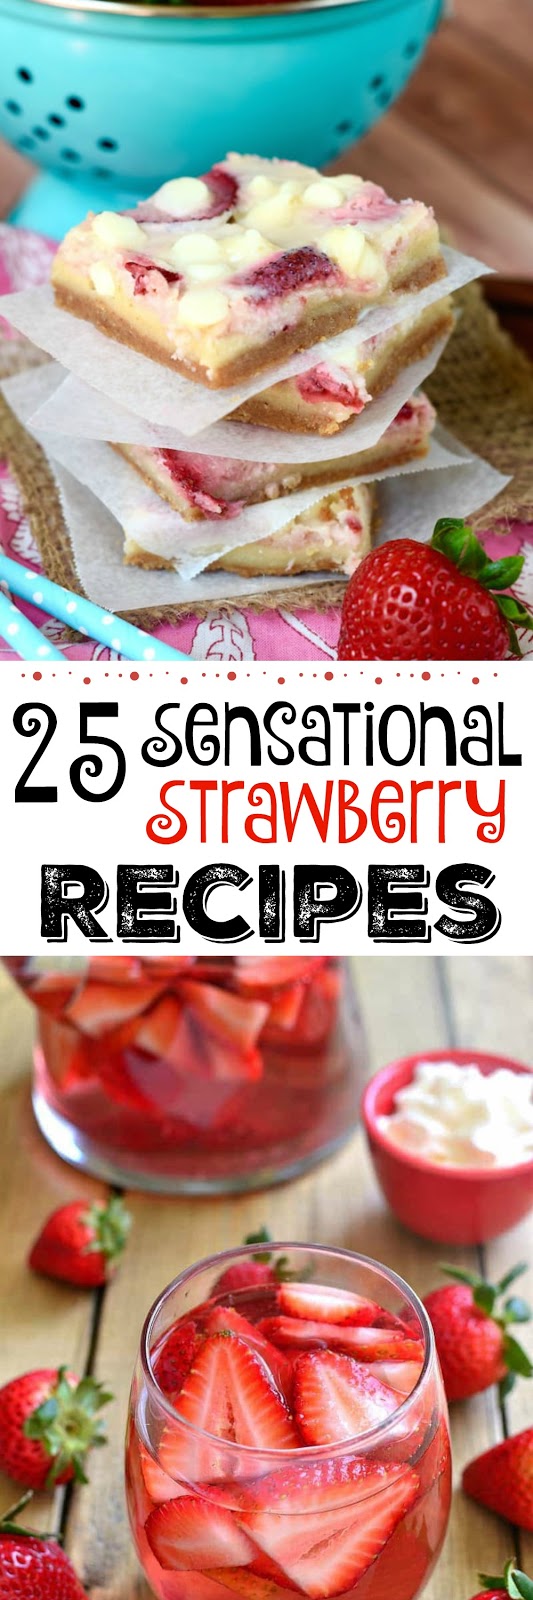 25 Sensational Strawberry Recipes...both sweet and savory!  Cakes, pies, bars, drinks, salads, brownies, tarts and more!  Save this post for strawberry season. (sweetandsavoryfood.com)